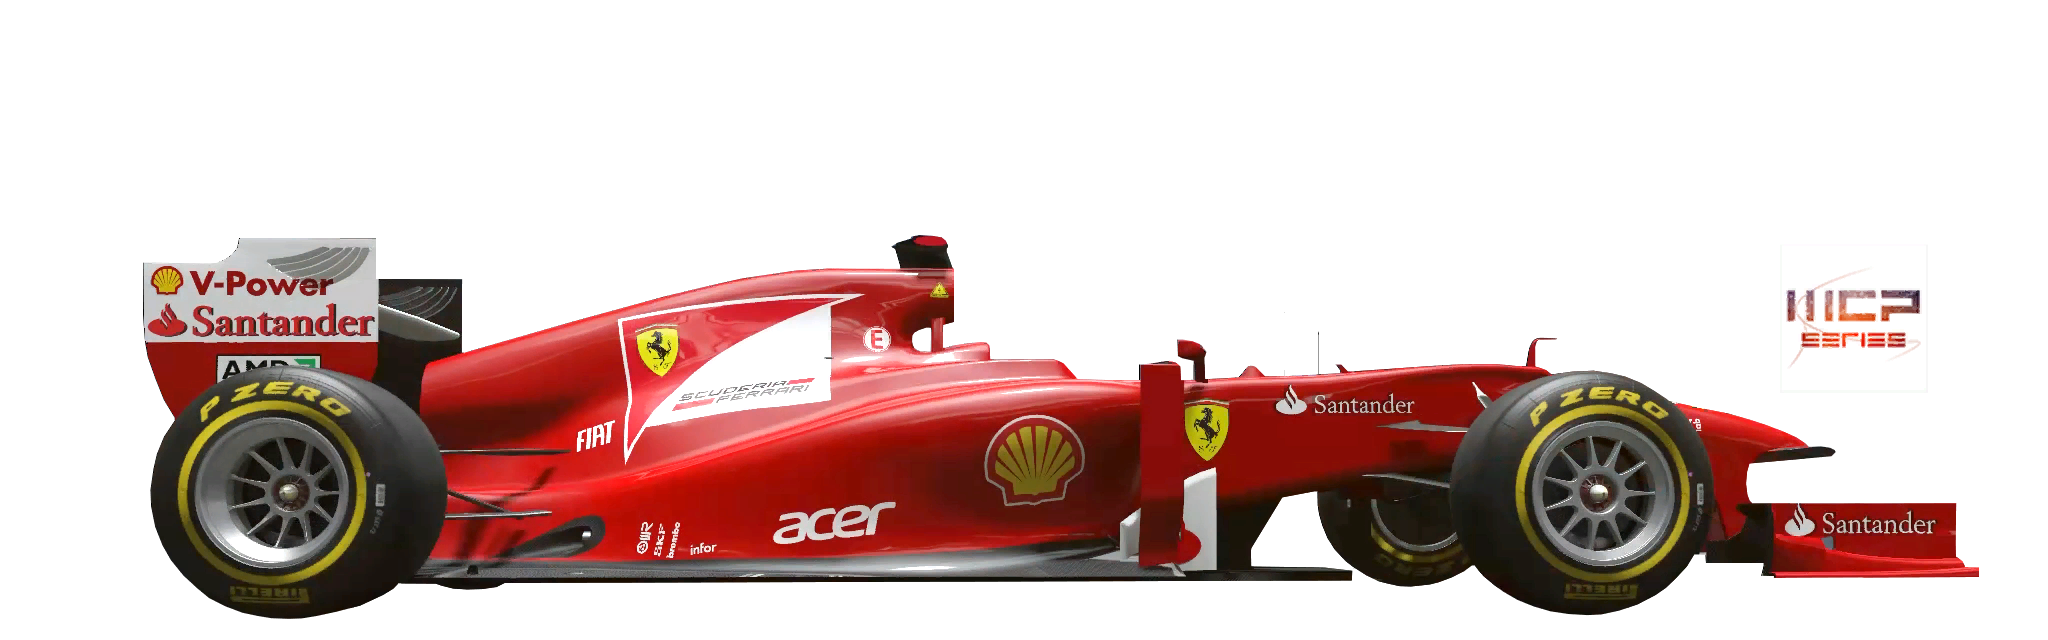 Ferrari05p.png